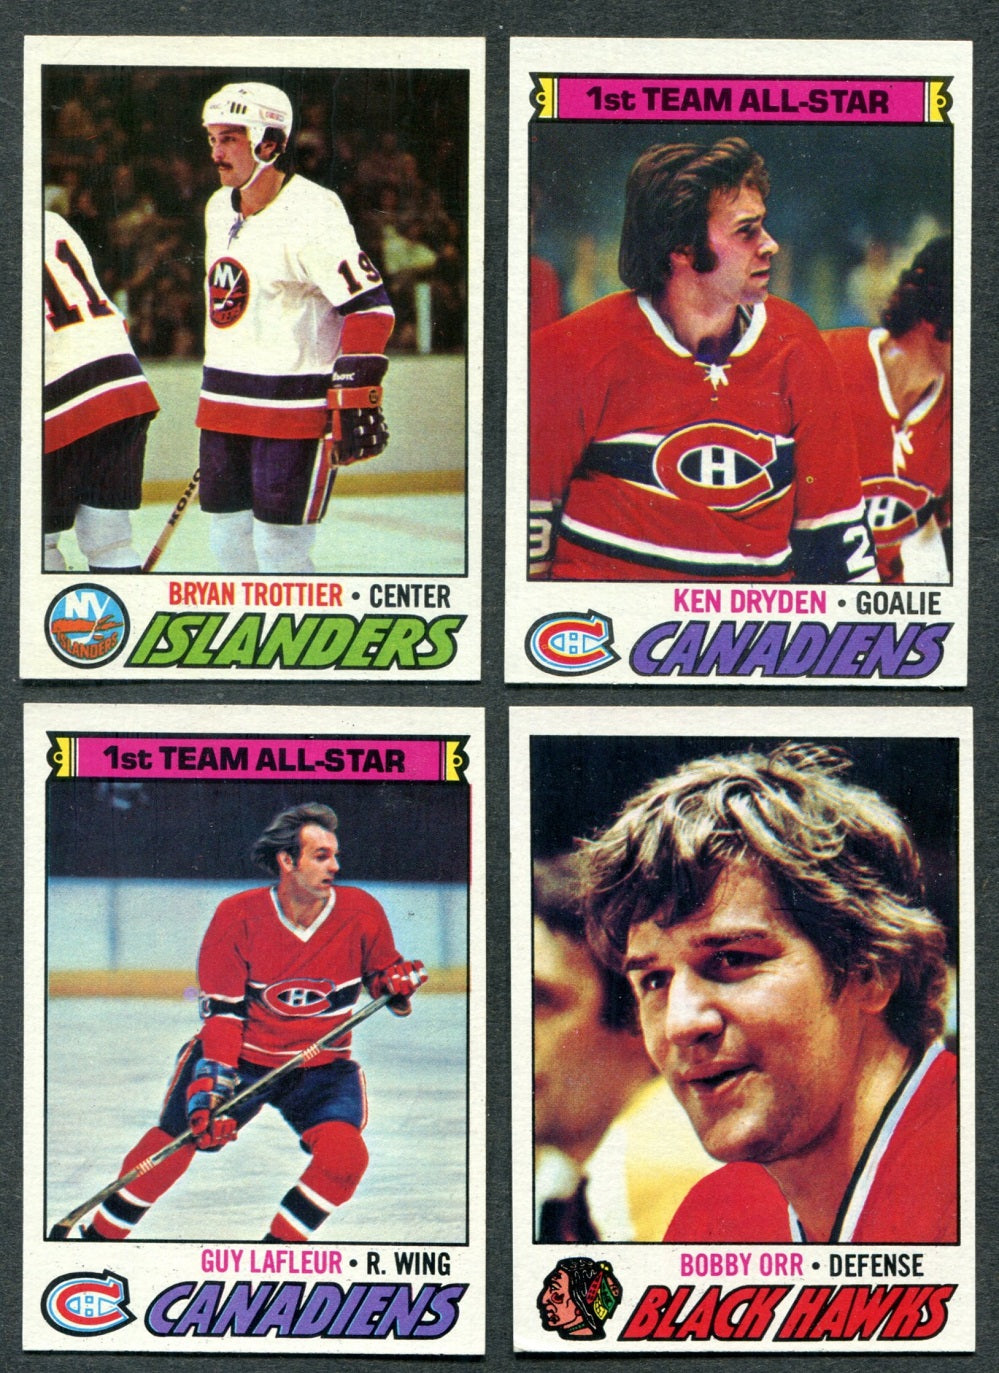 1977/78 Topps Hockey Complete Set EX/MT NM (268) (23-312)